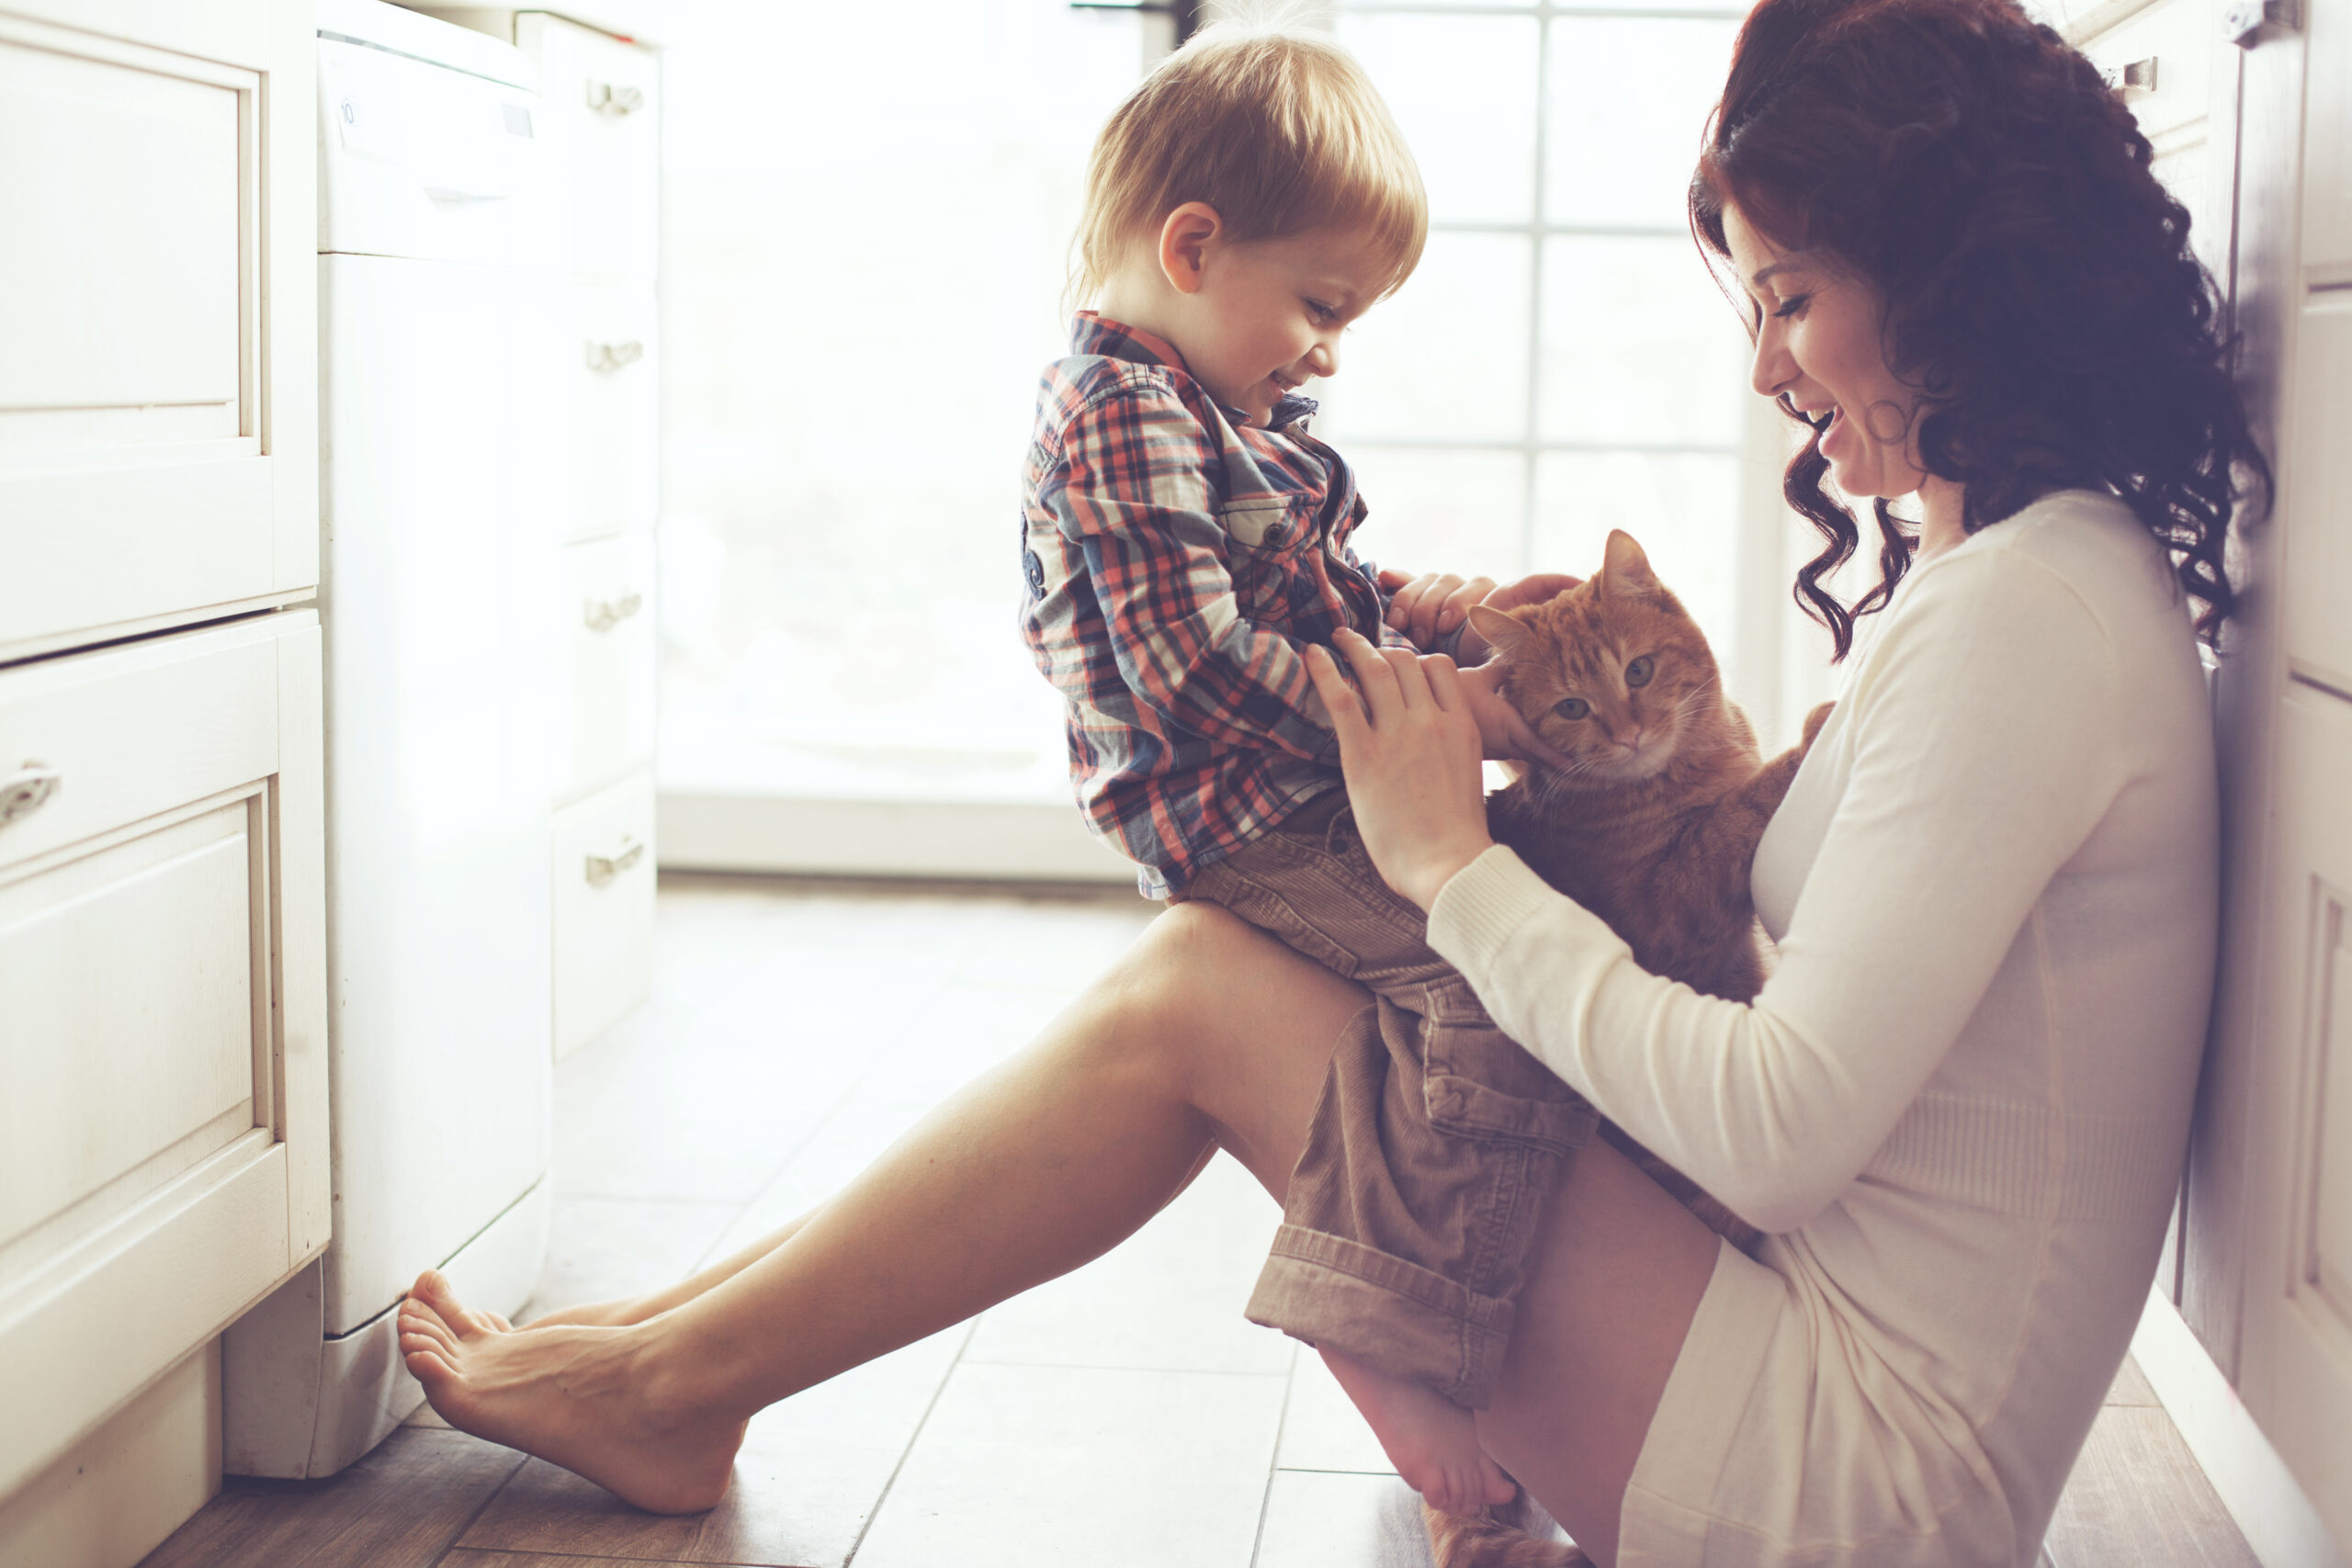 Mother-Infant Attachment: Should We Care?